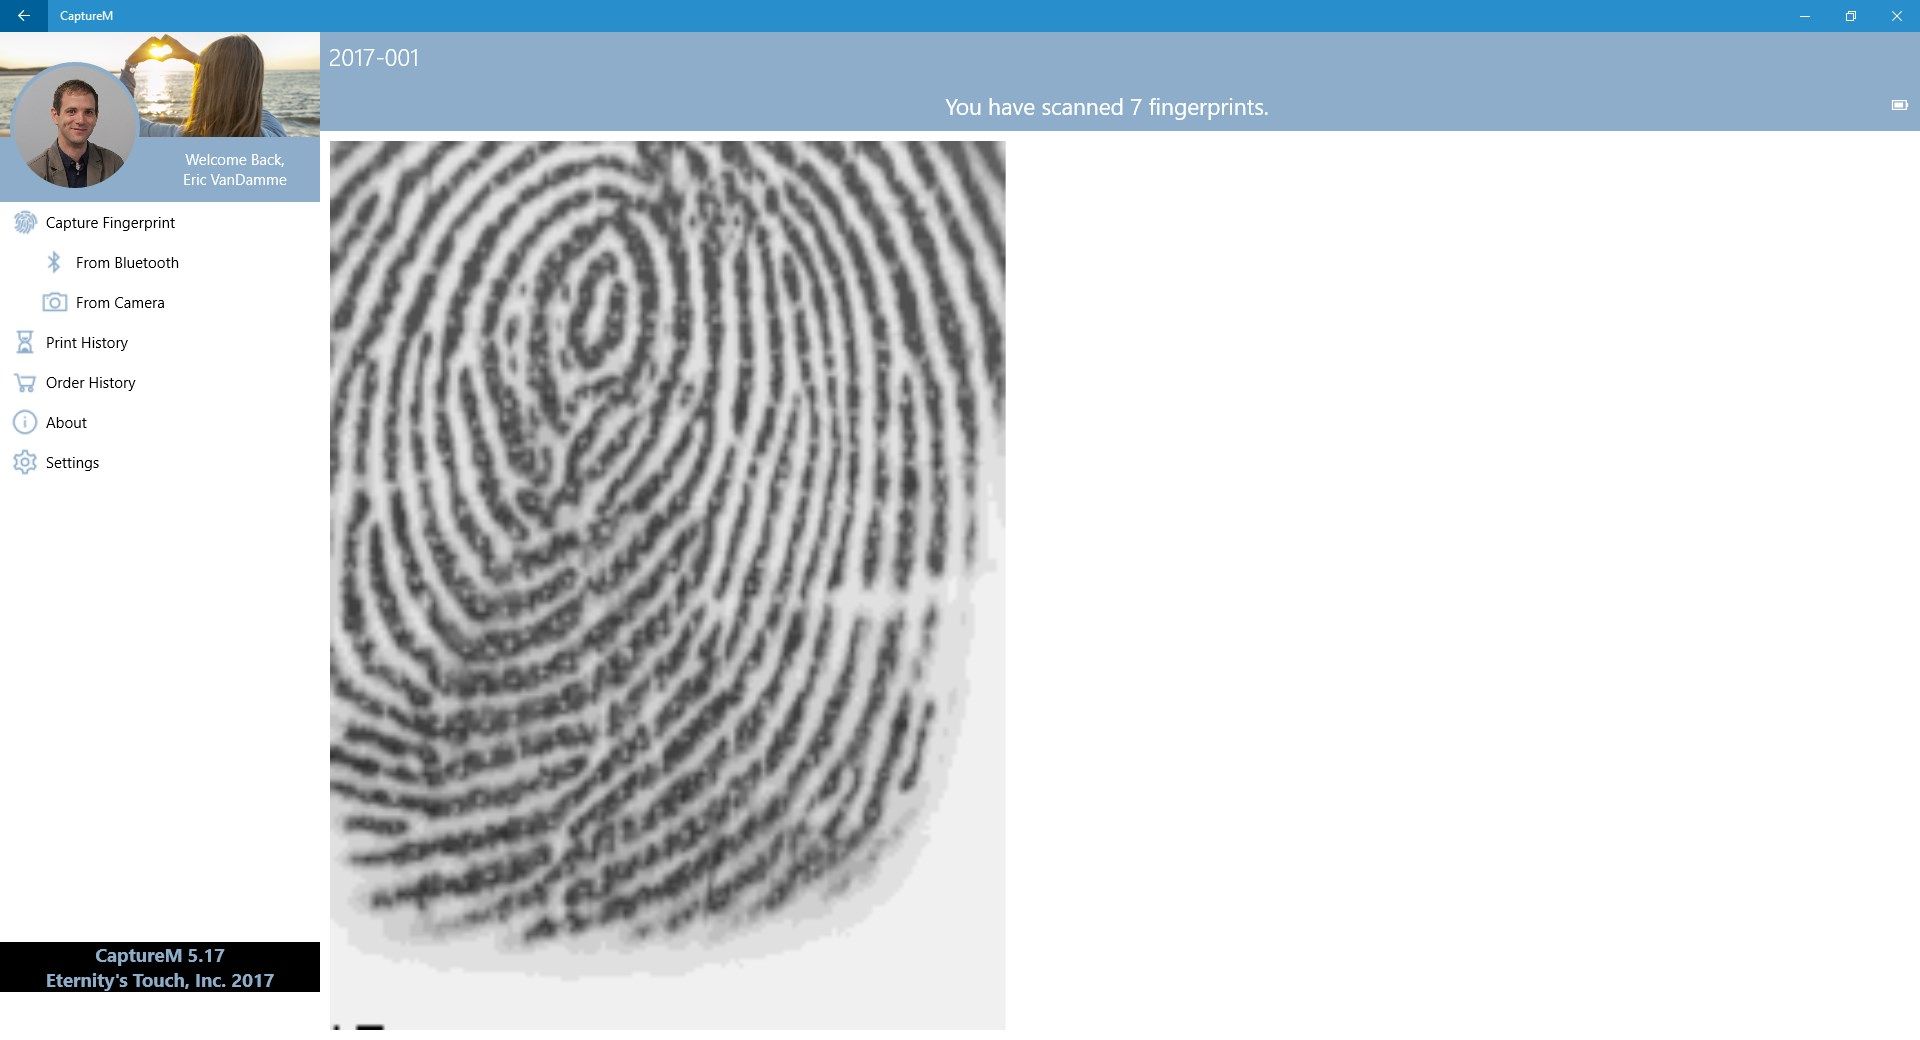 Fingerprint Scan from an Eternity's Touch Bluetooth Scanner